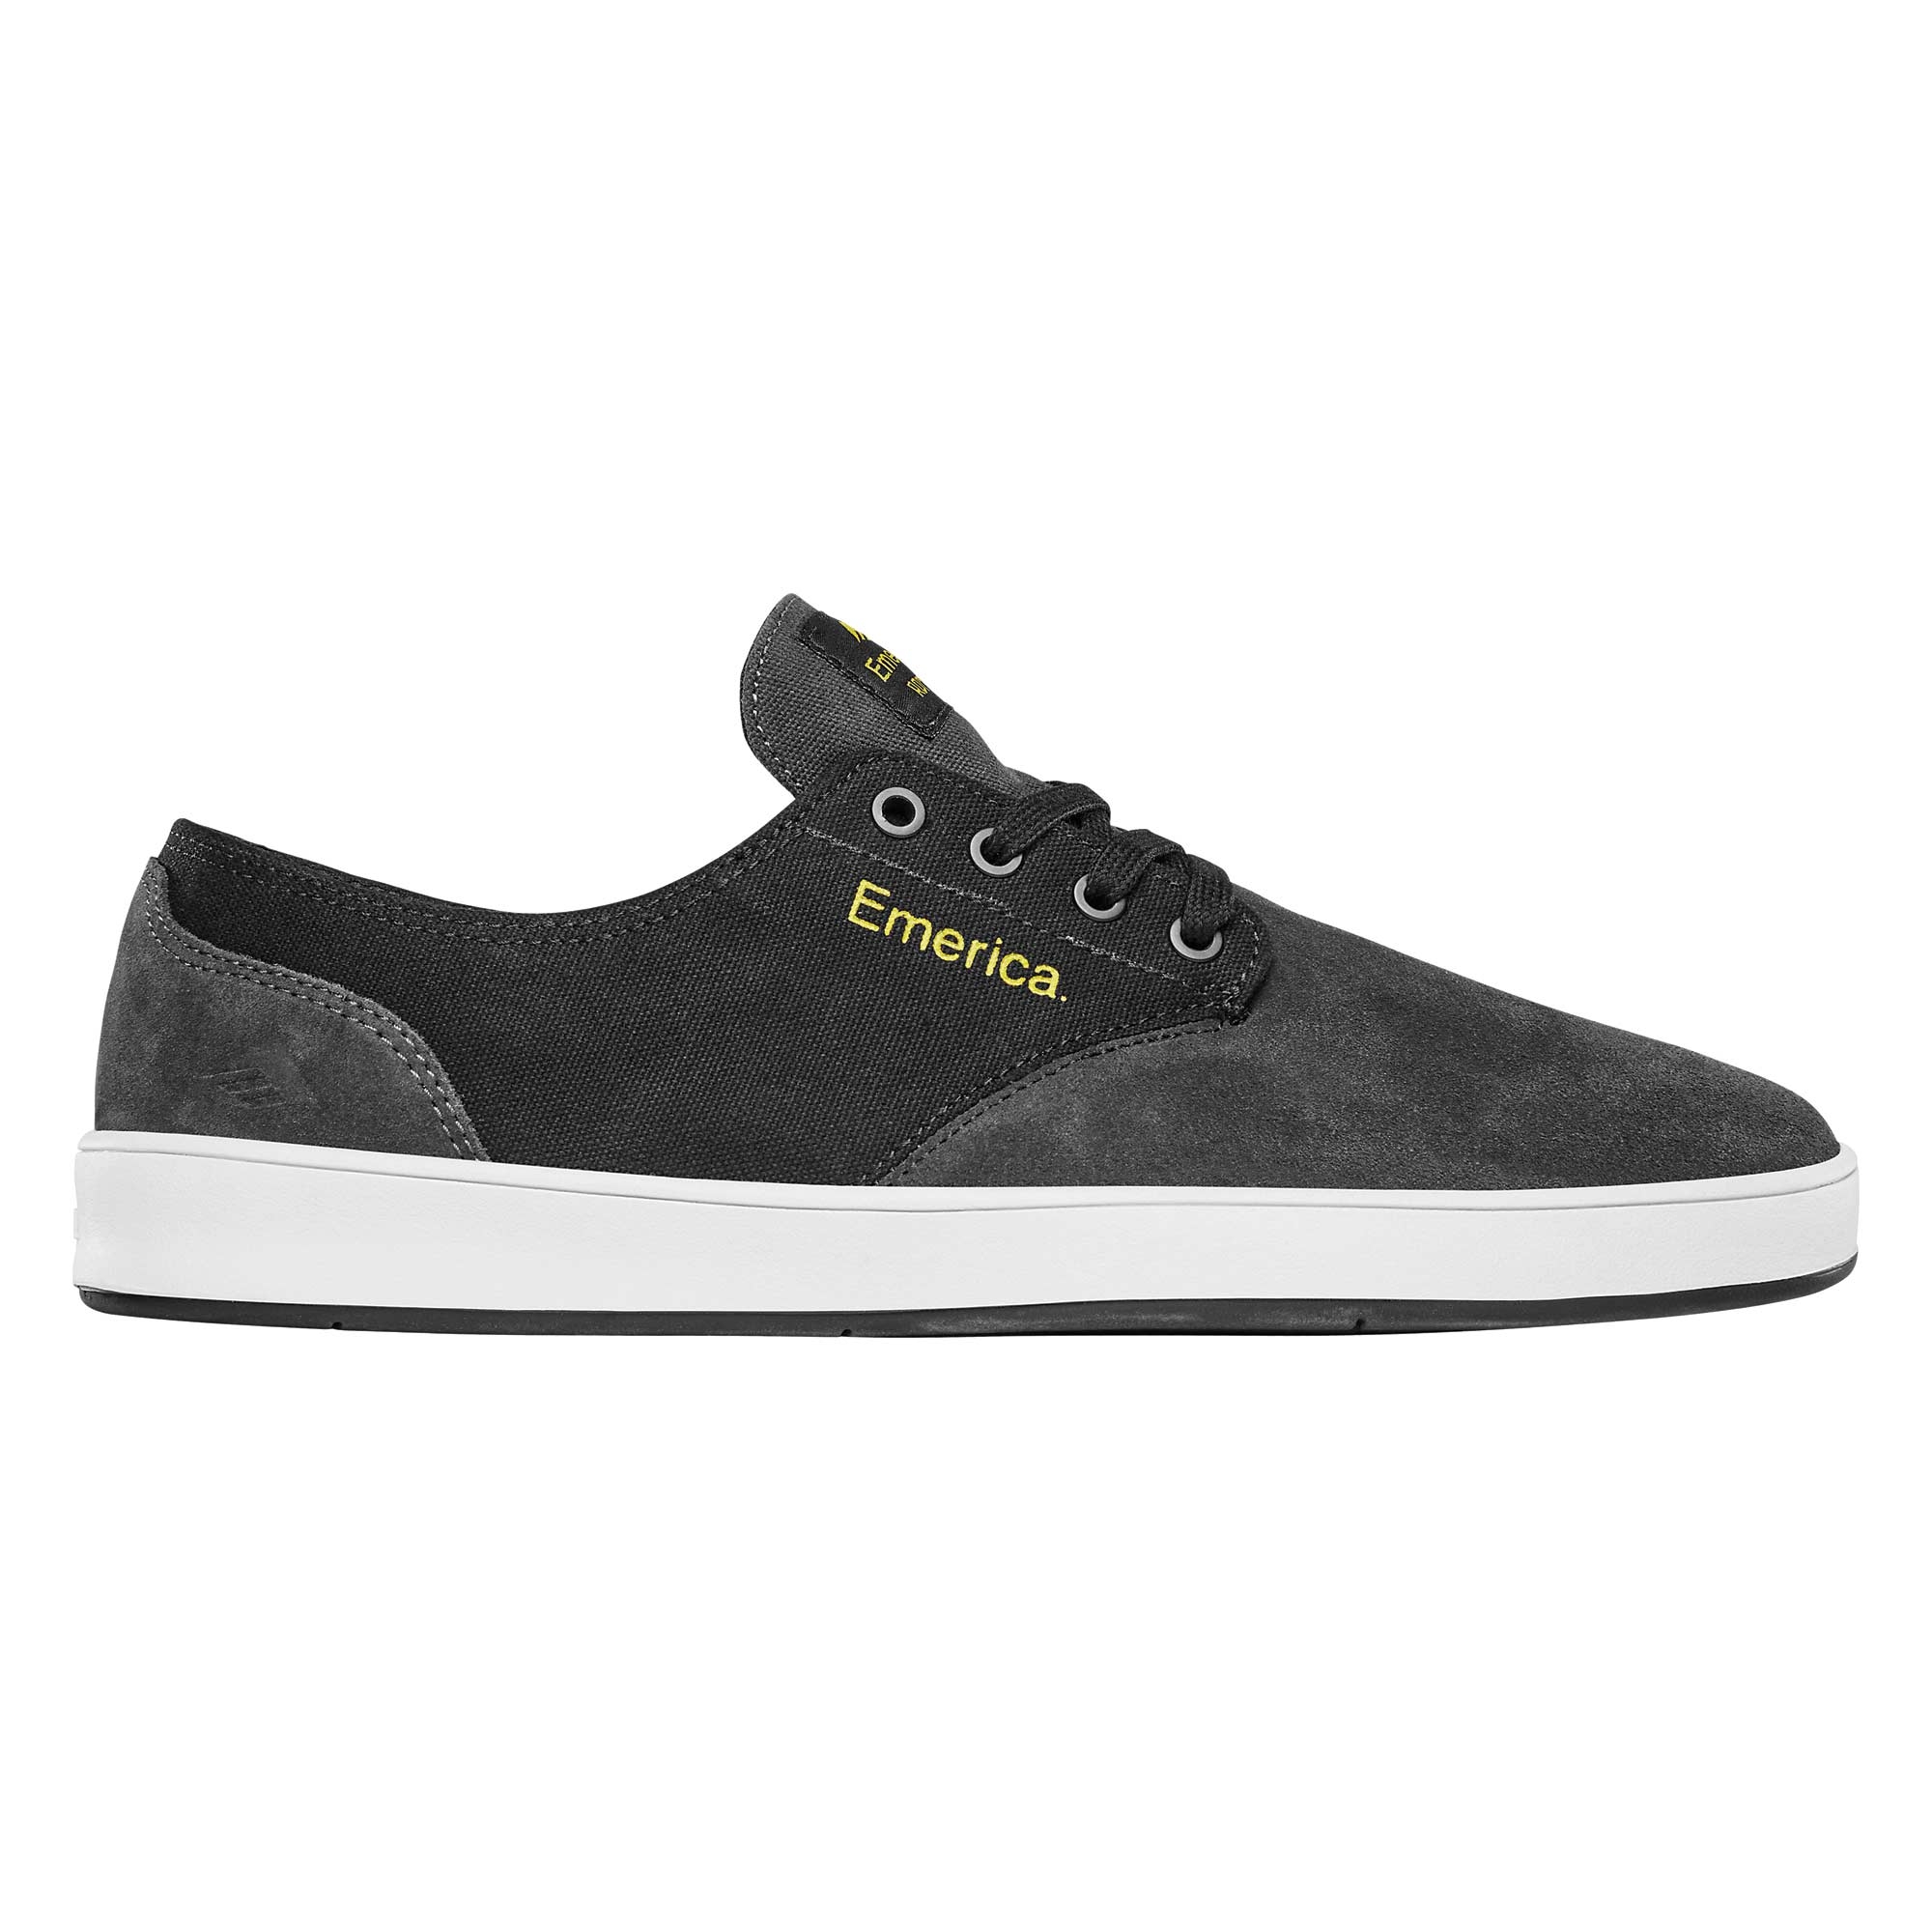 EMERICA Shoe THE ROMERO LACED gry/bla/yel grey/black/yellow